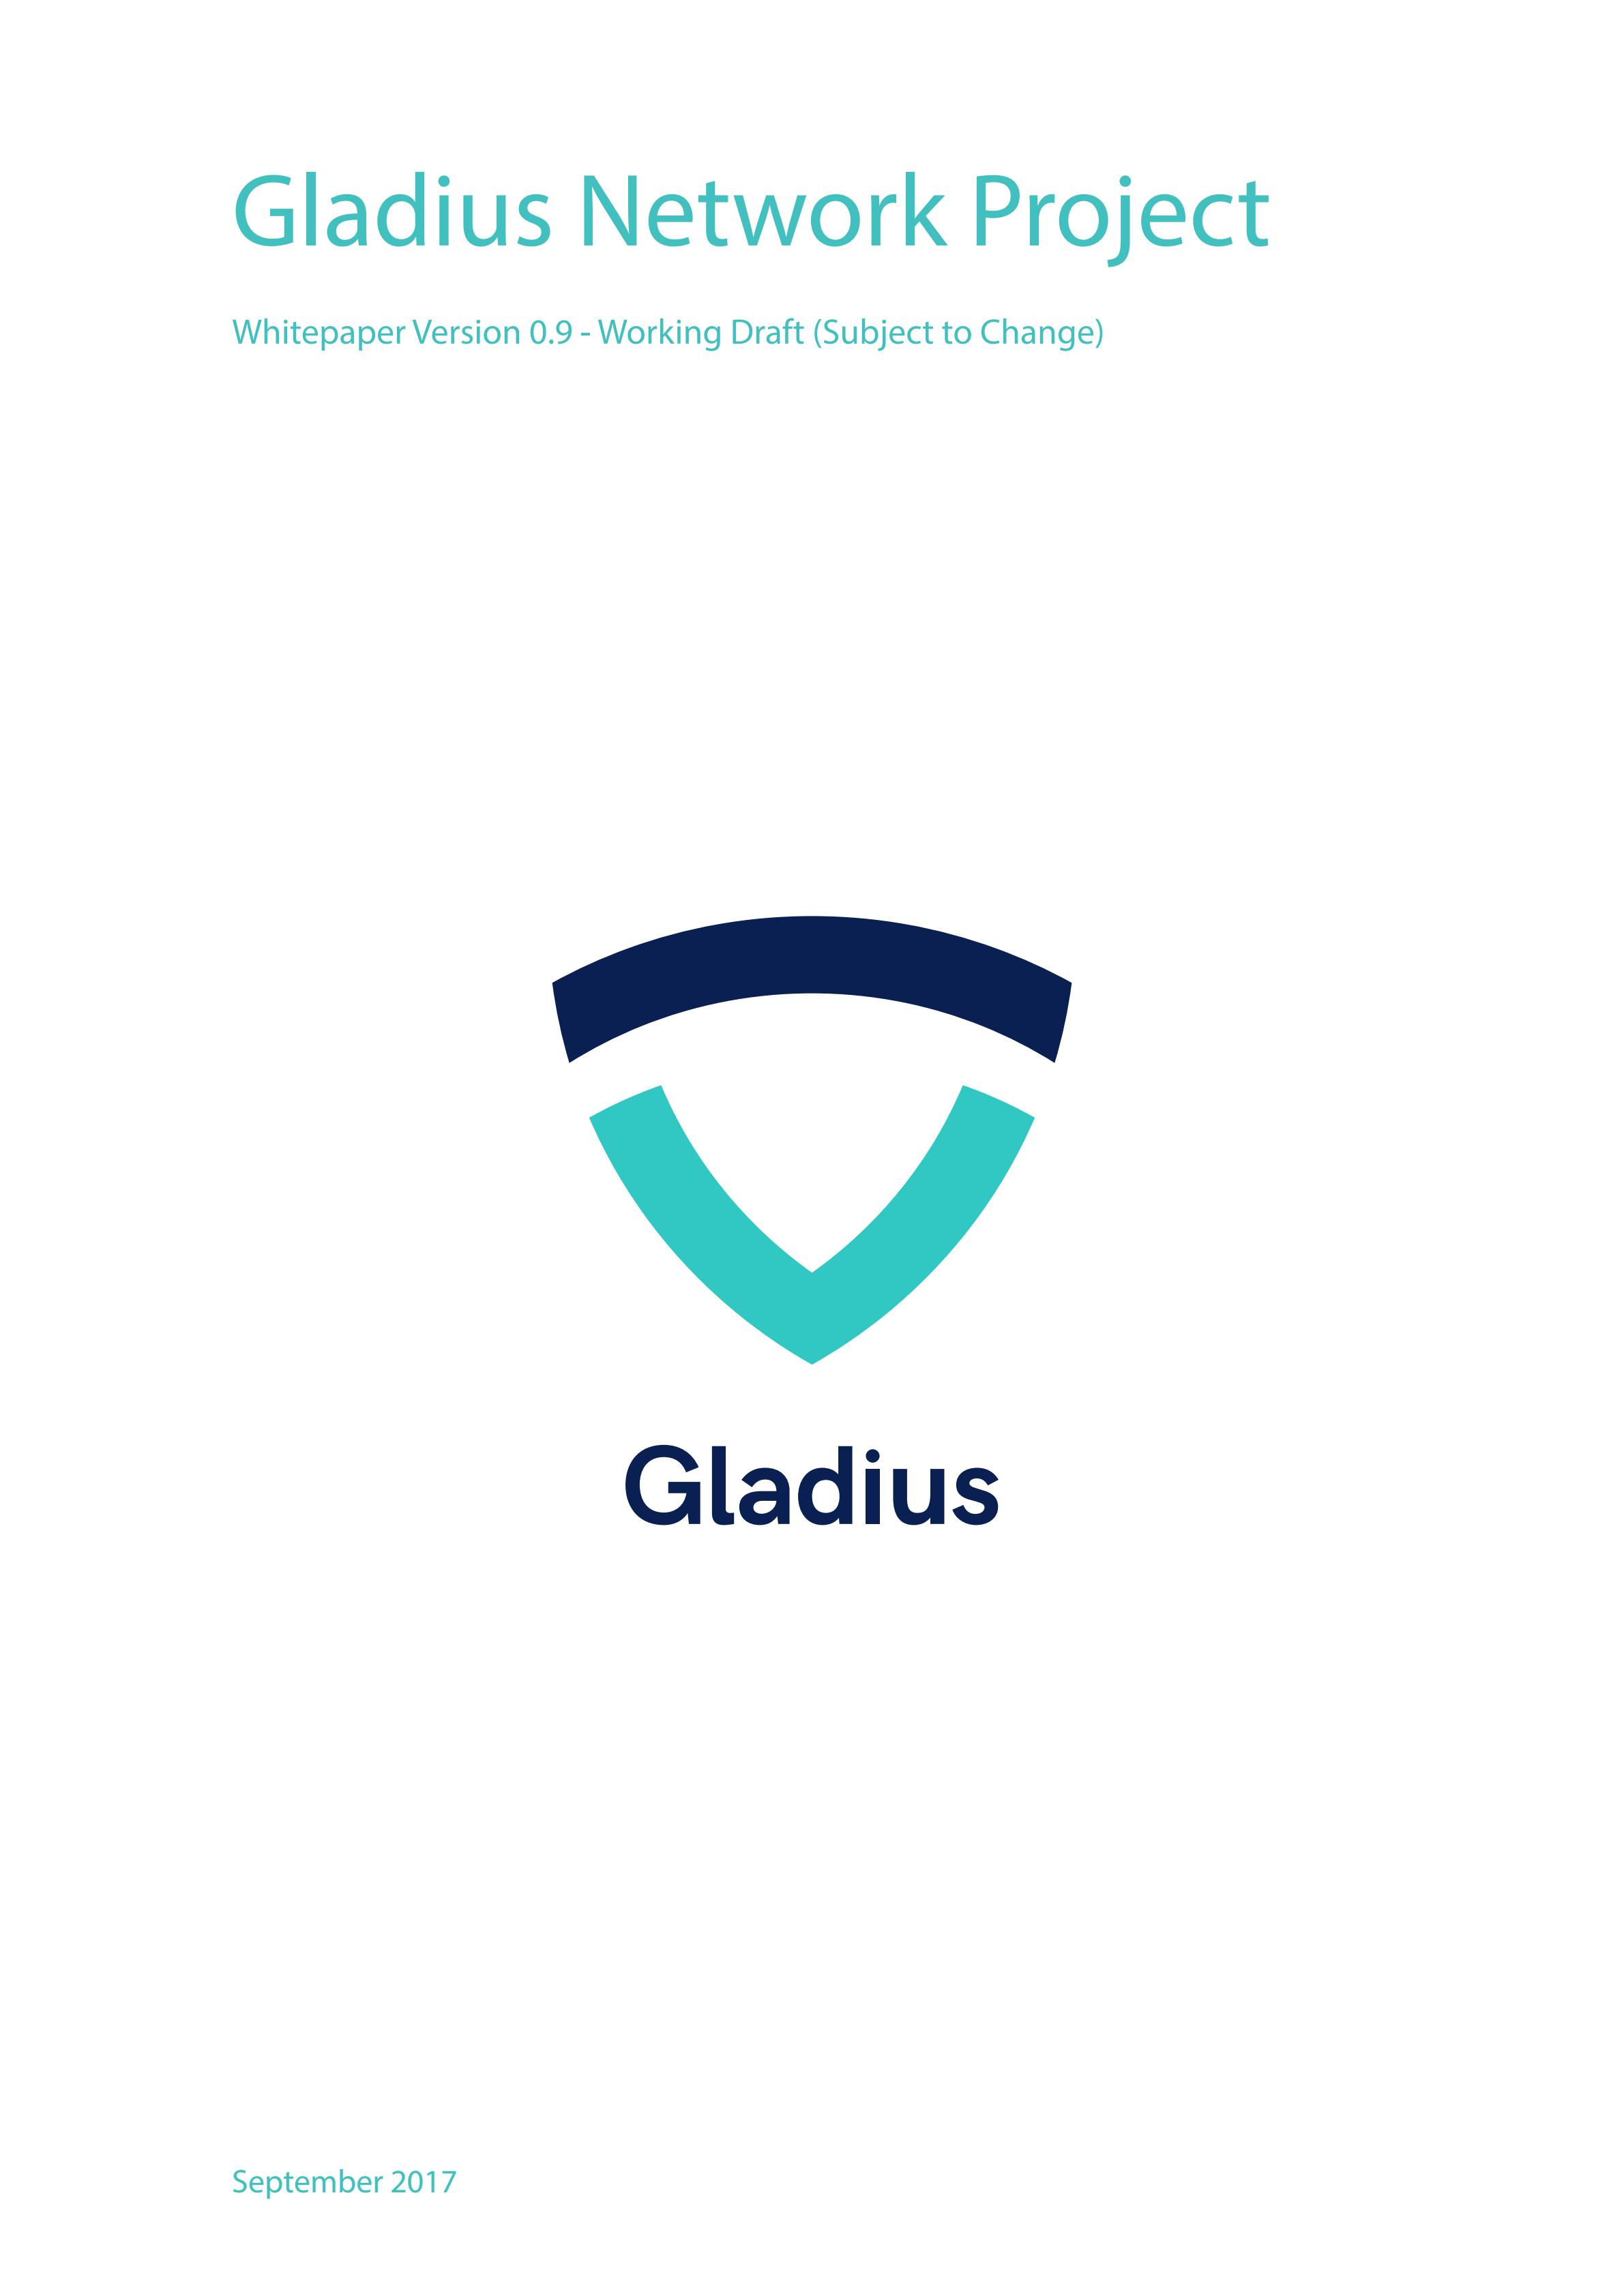 GLA_gladius-whitepaper_00.jpg